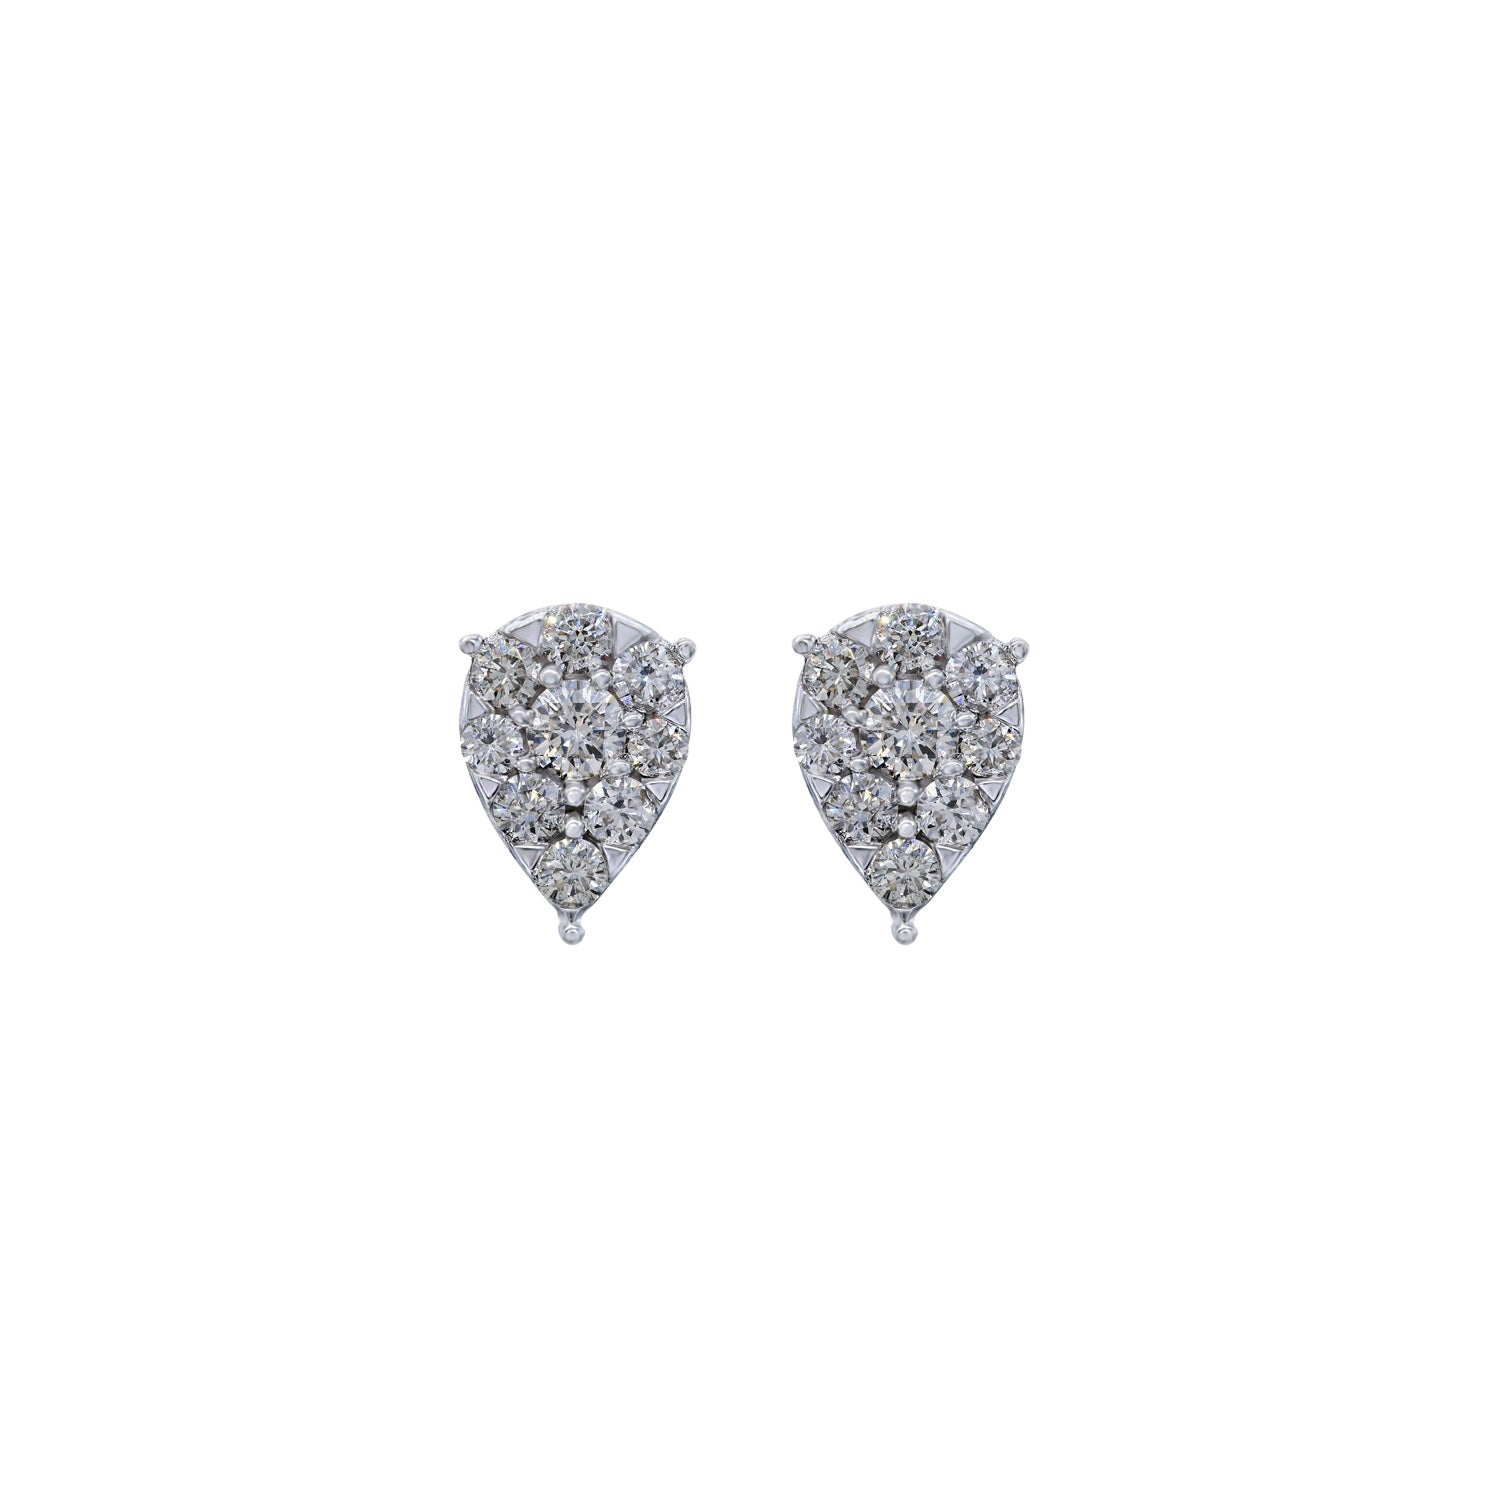 Diamond Earrings. Diamond Studs. Pear shaped diamond earrings